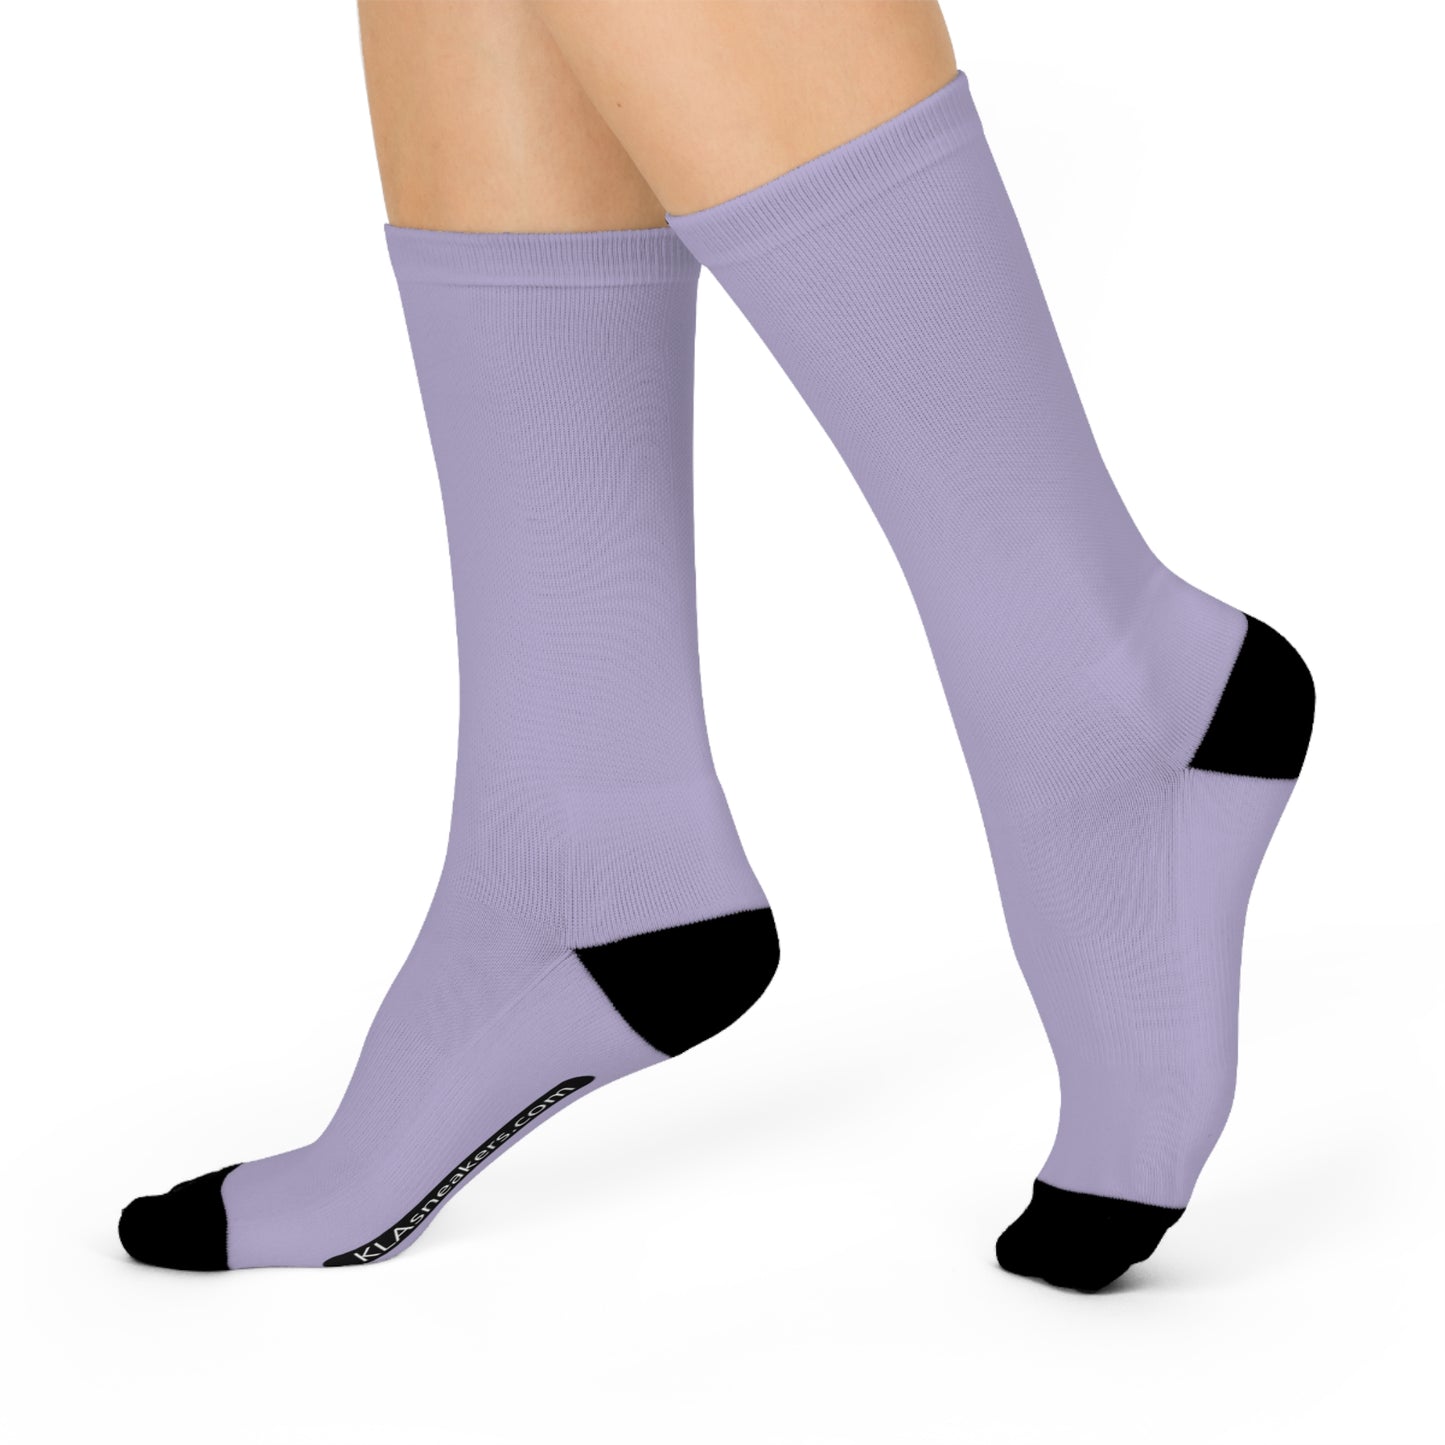 Unisex Crew Socks - Light Purple White One size 3/4 Crew